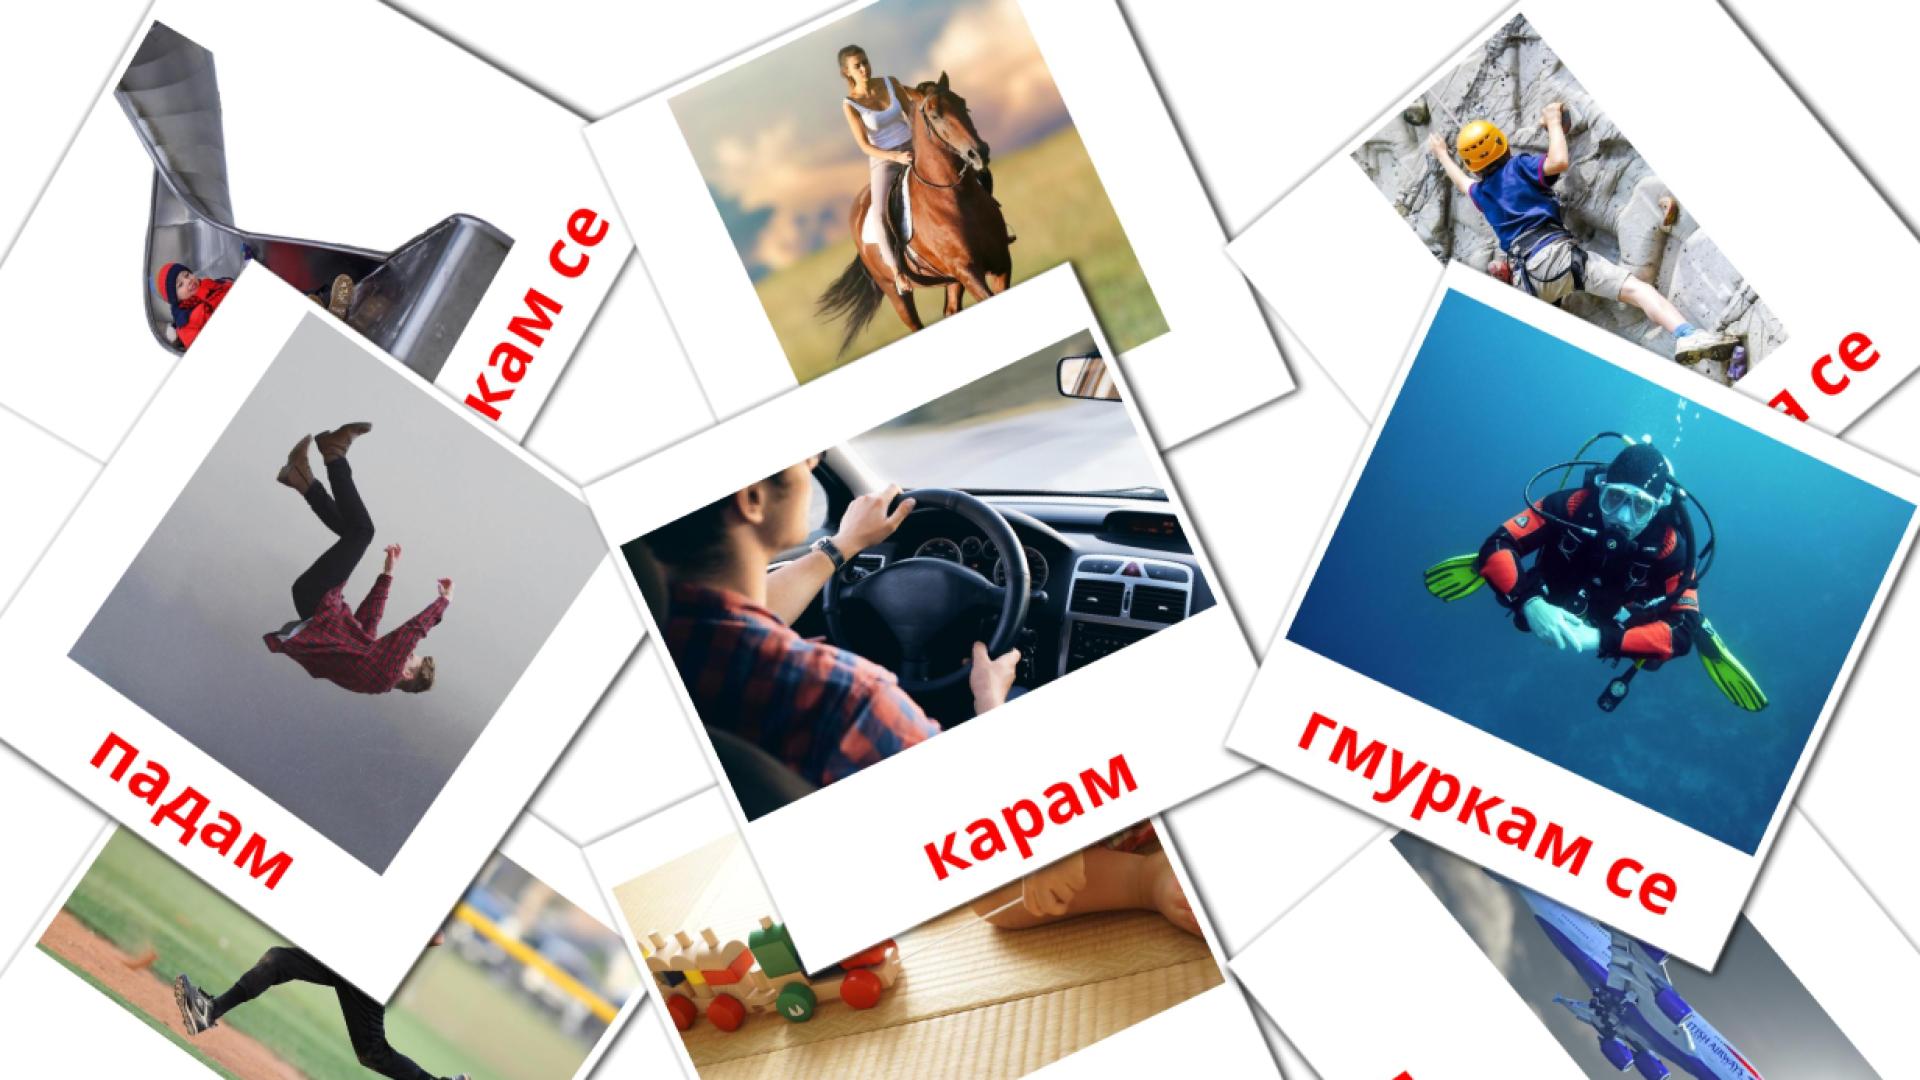 Movement verbs - bulgarian vocabulary cards